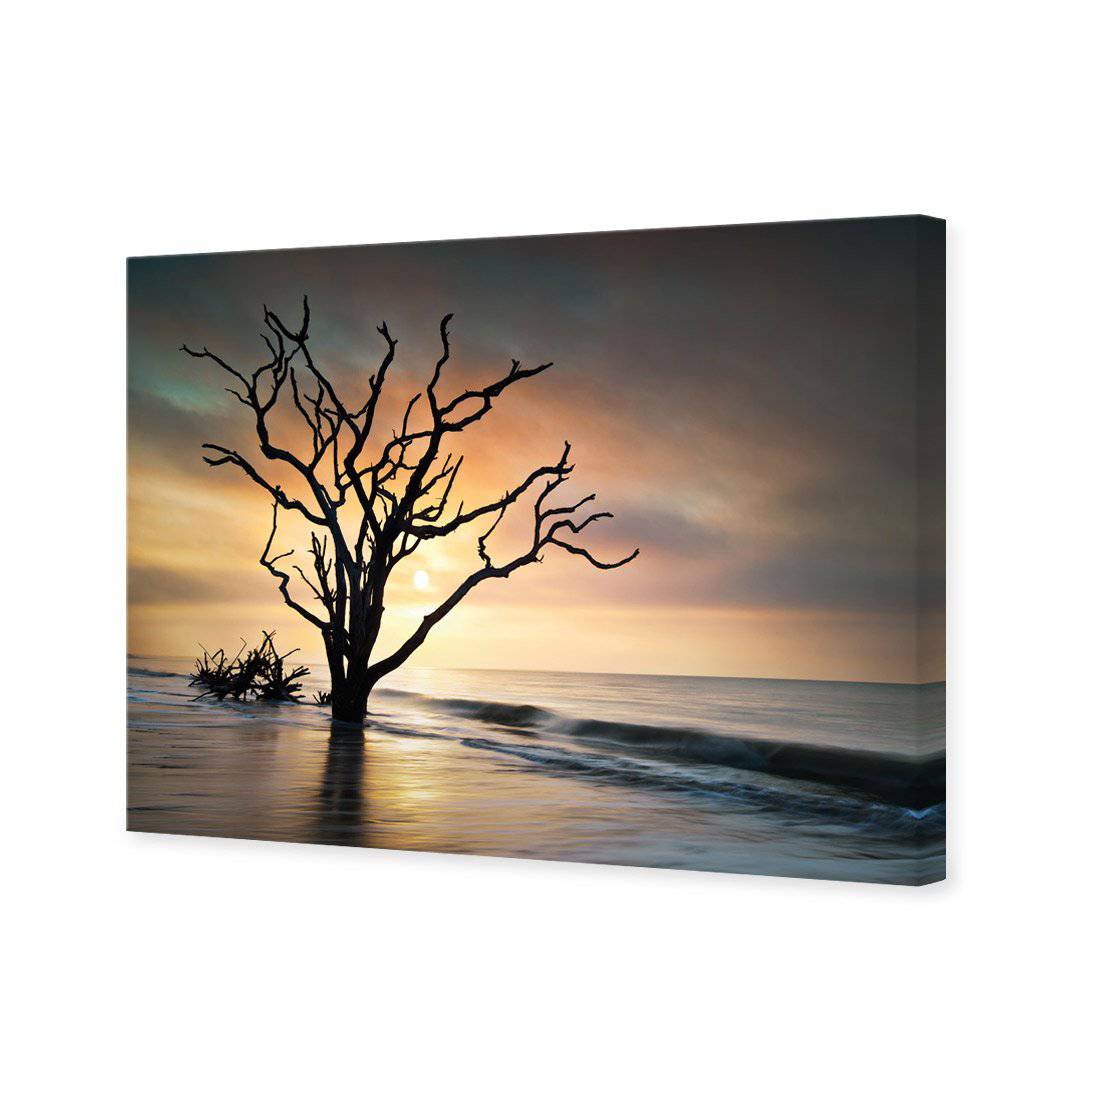 Botany Bay Sunrise Canvas Art-Canvas-Wall Art Designs-45x30cm-Canvas - No Frame-Wall Art Designs